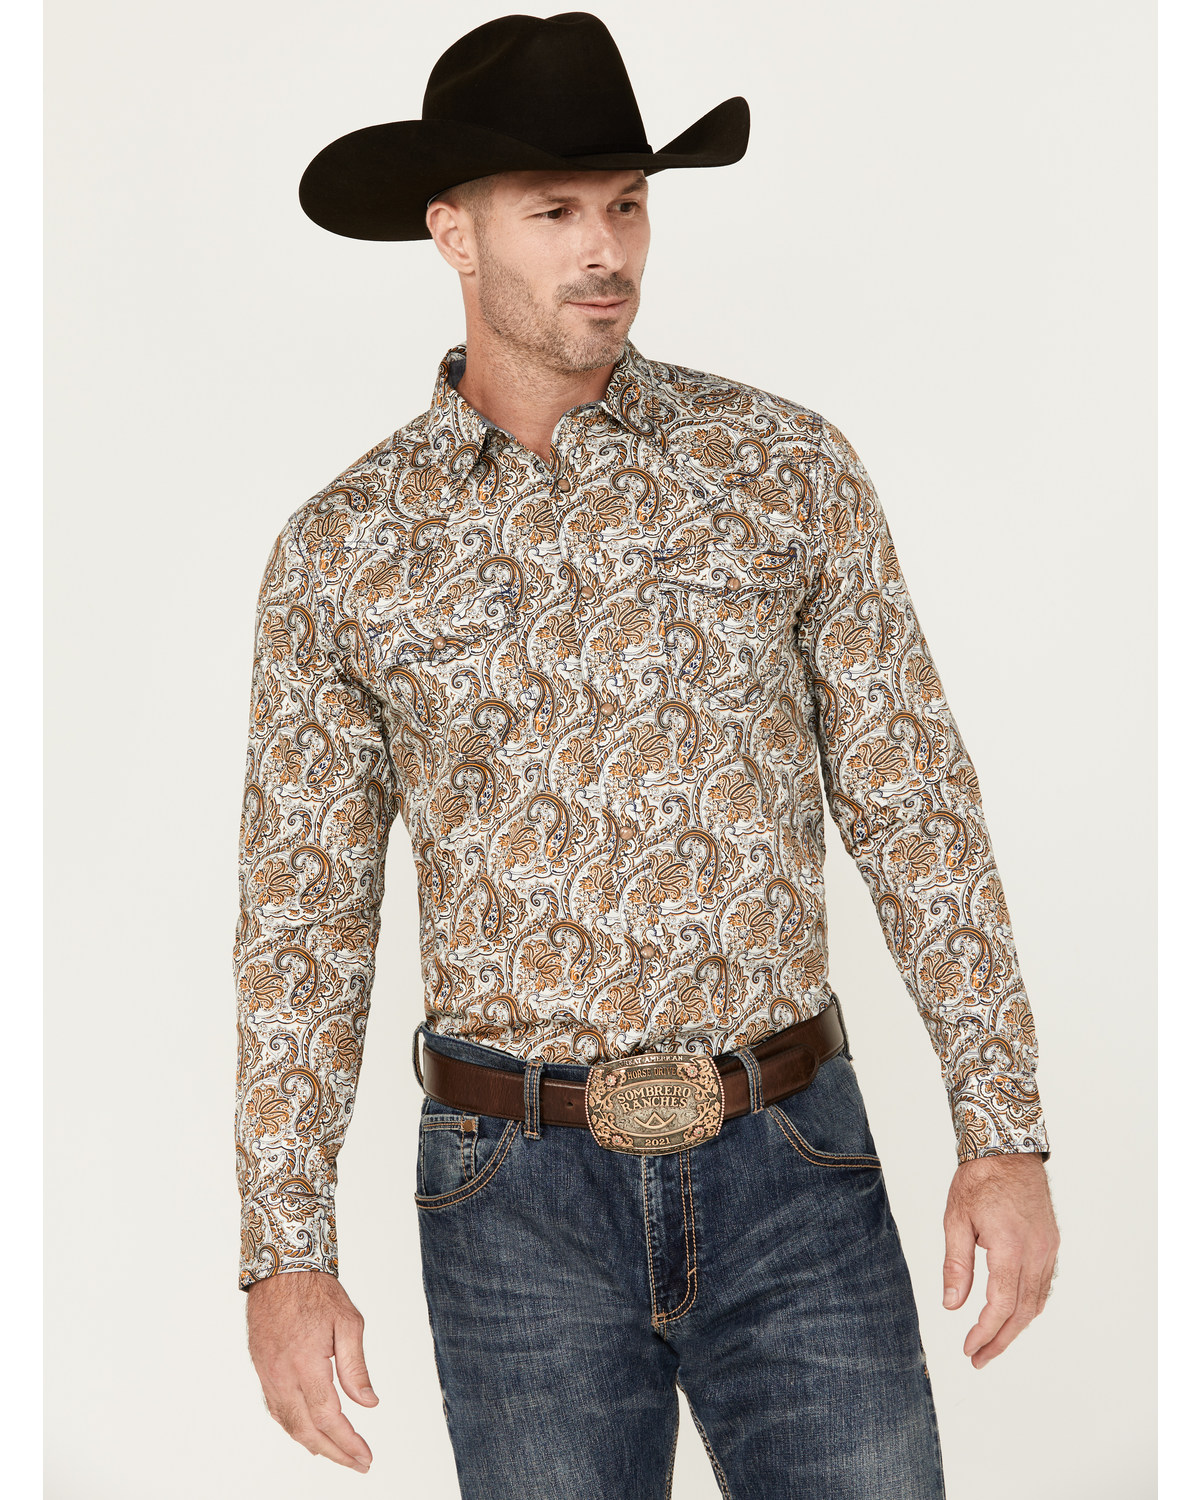 Cody James Men's Gold Dust Paisley Print Long Sleeve Snap Western Shirt